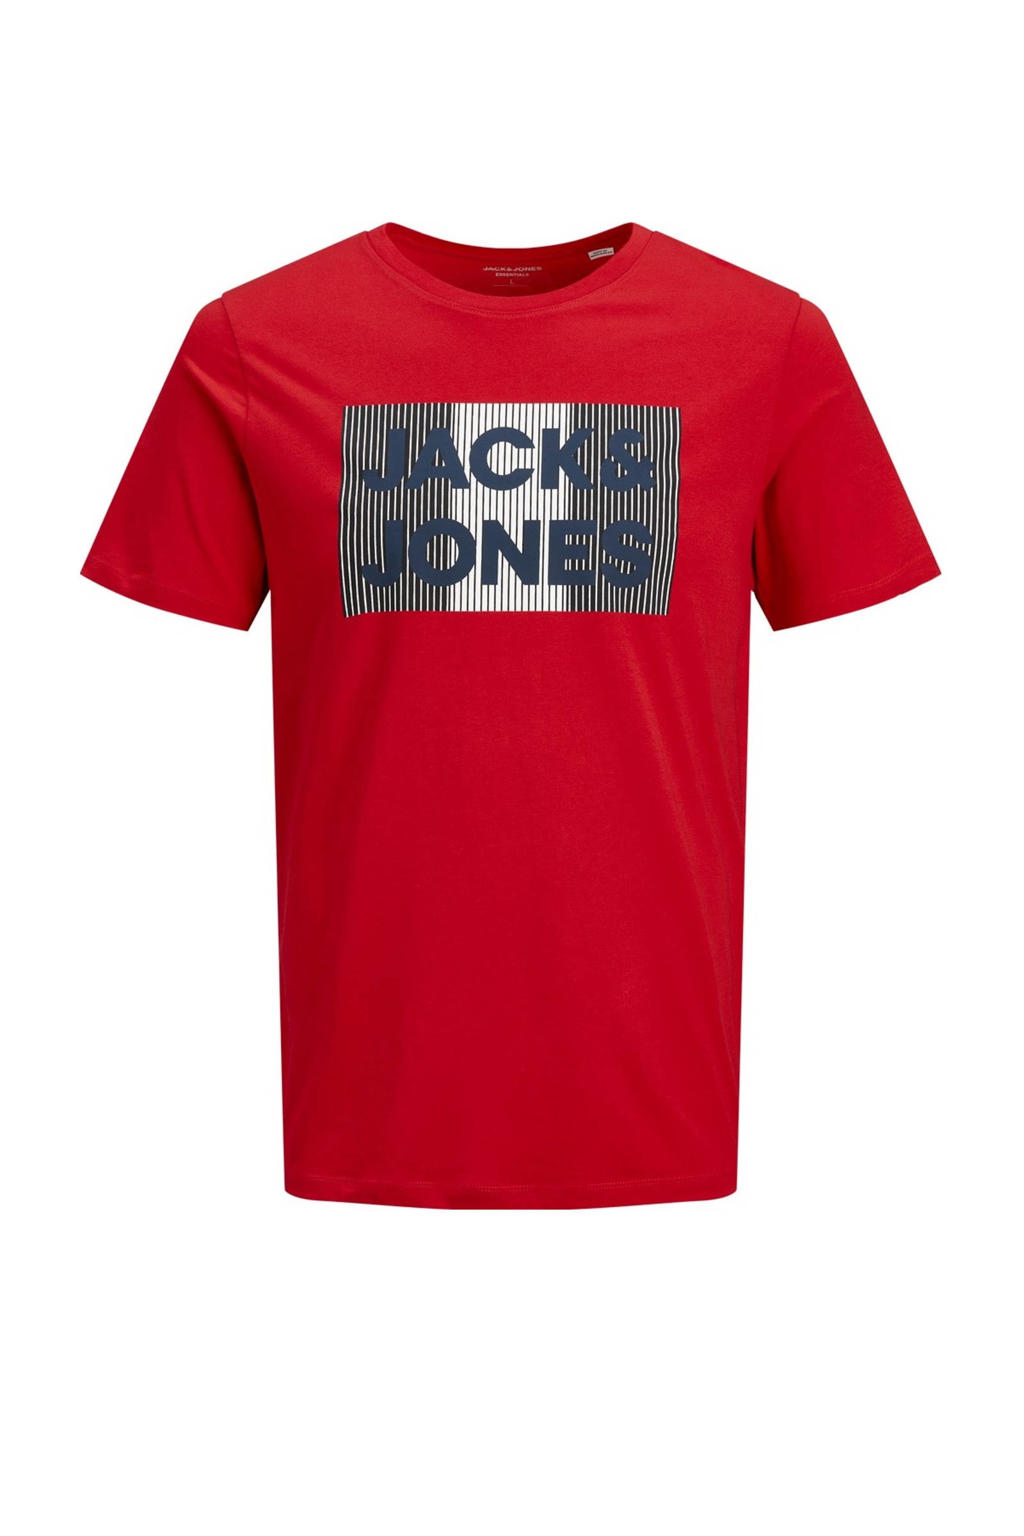 JACK & JONES JUNIOR T-shirt JJECORP met logo rood/blauw